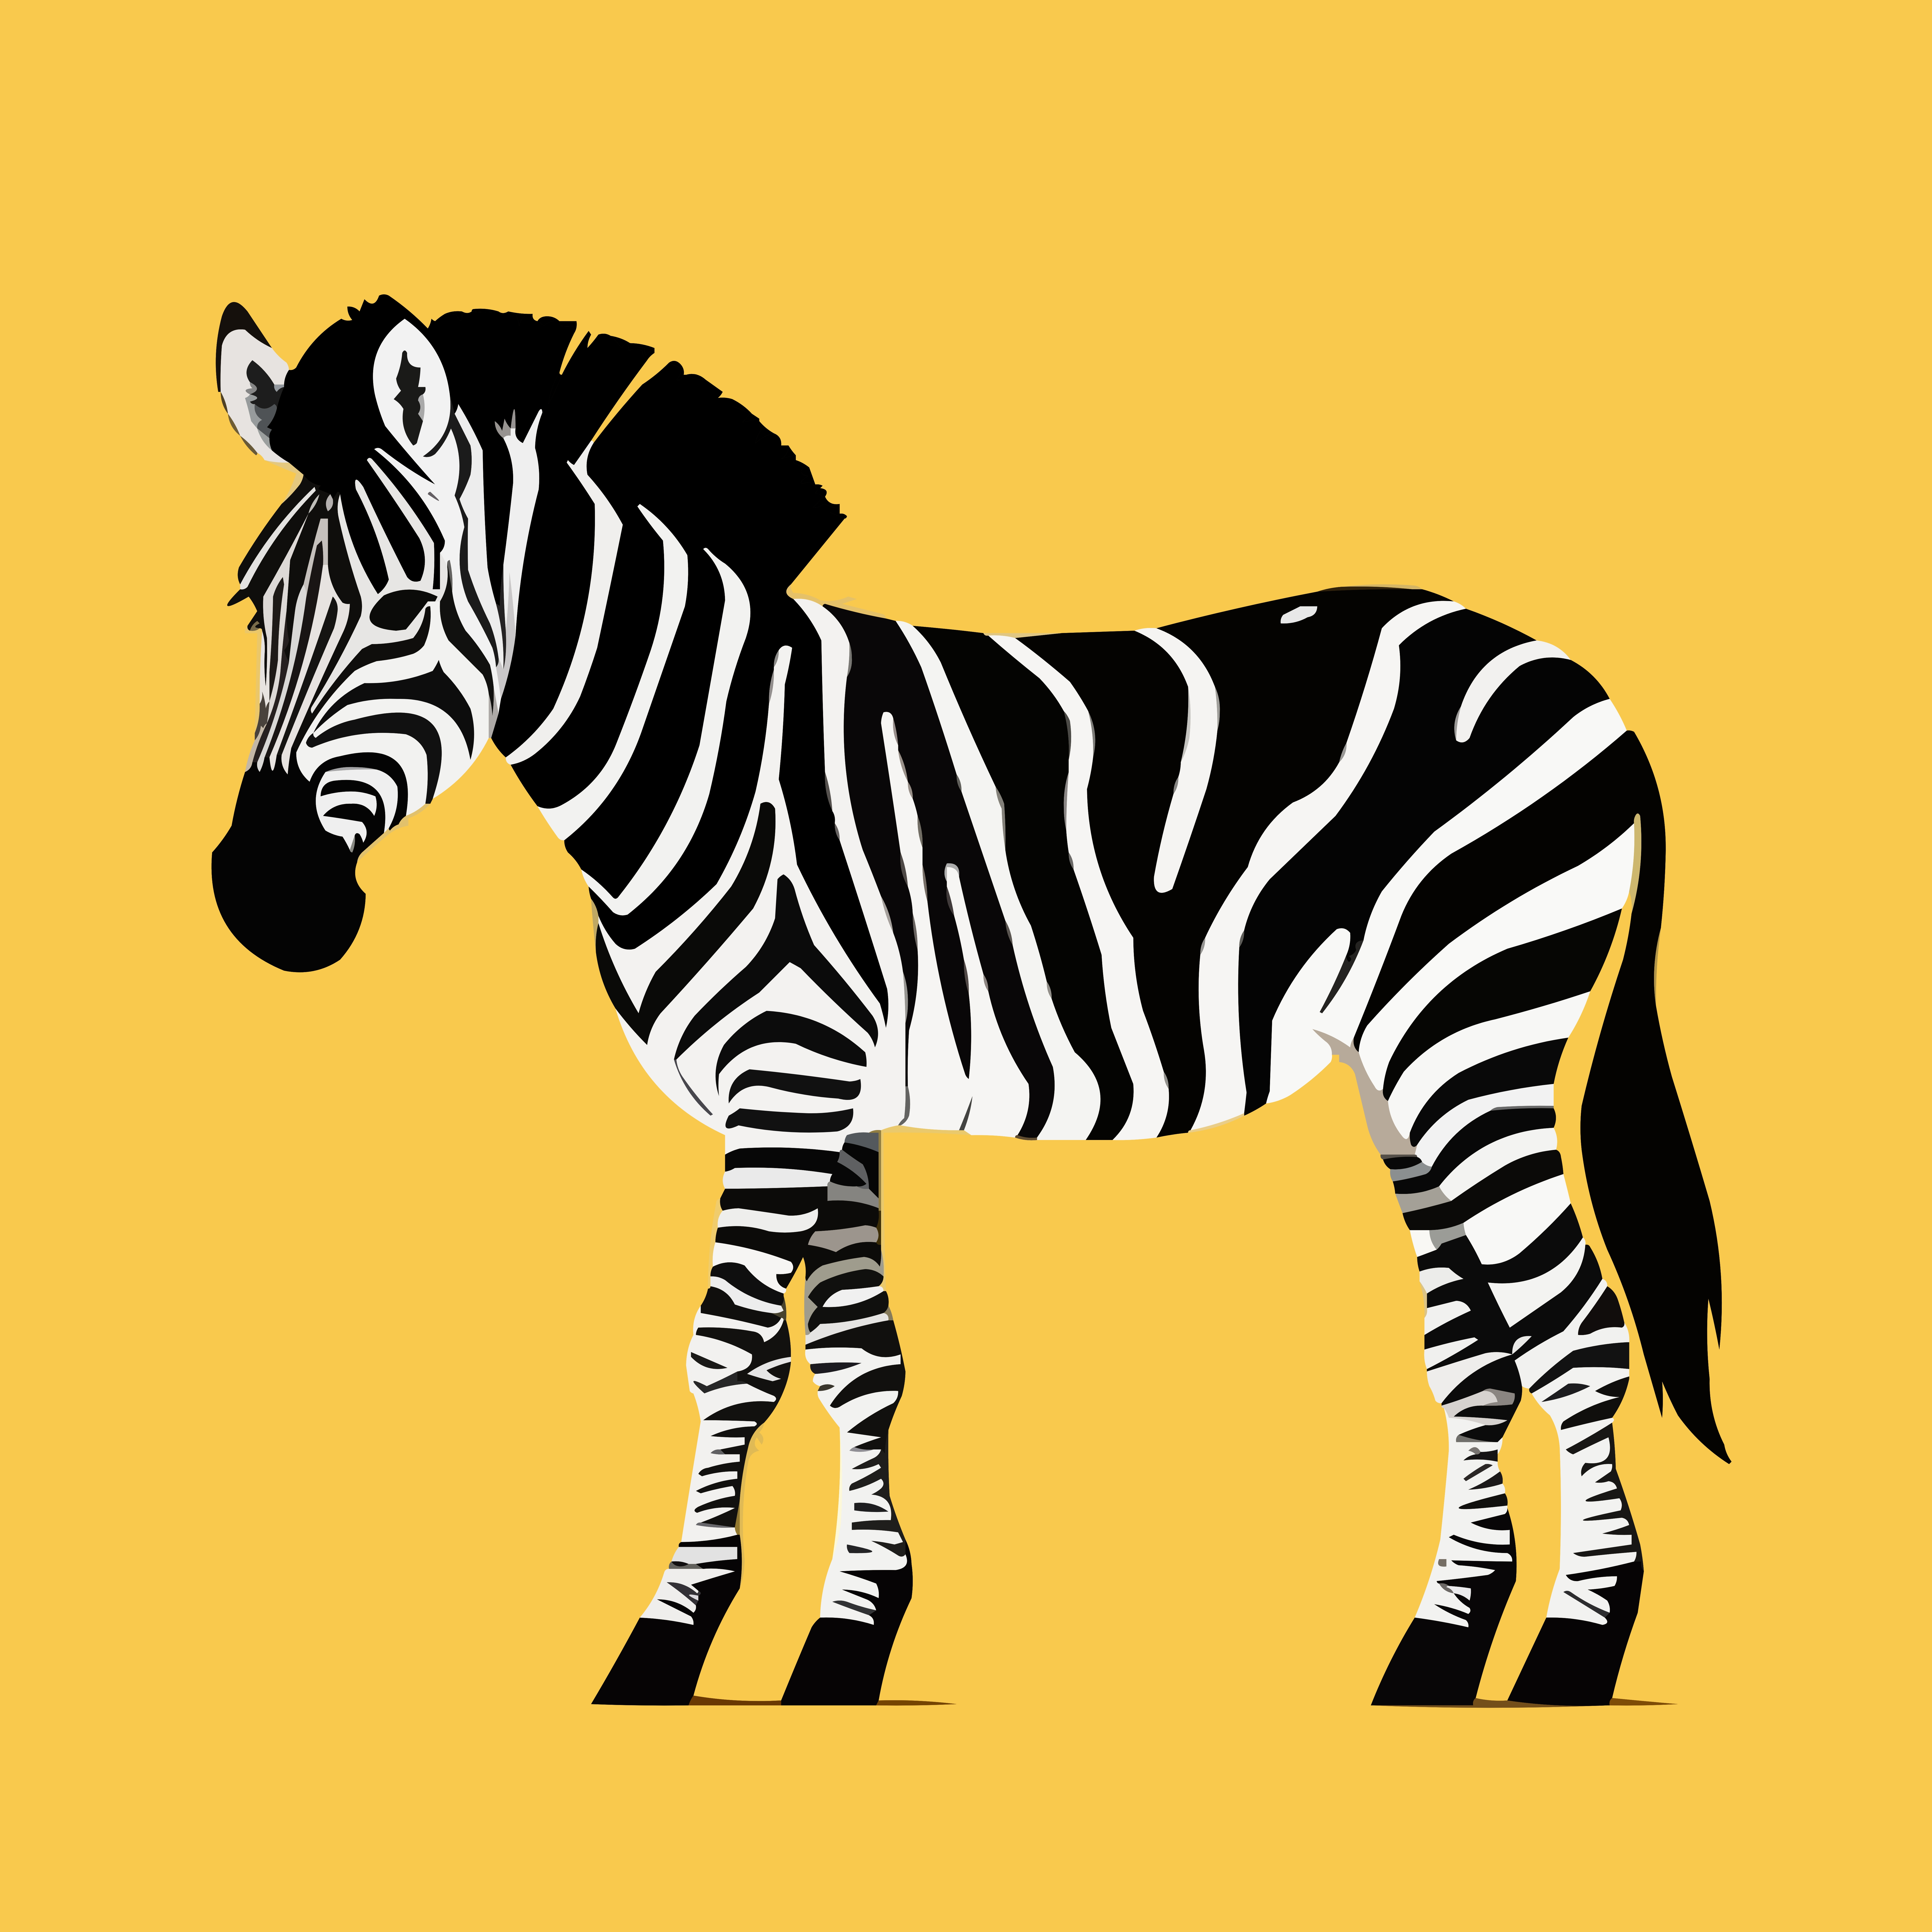 Zebra graphic design